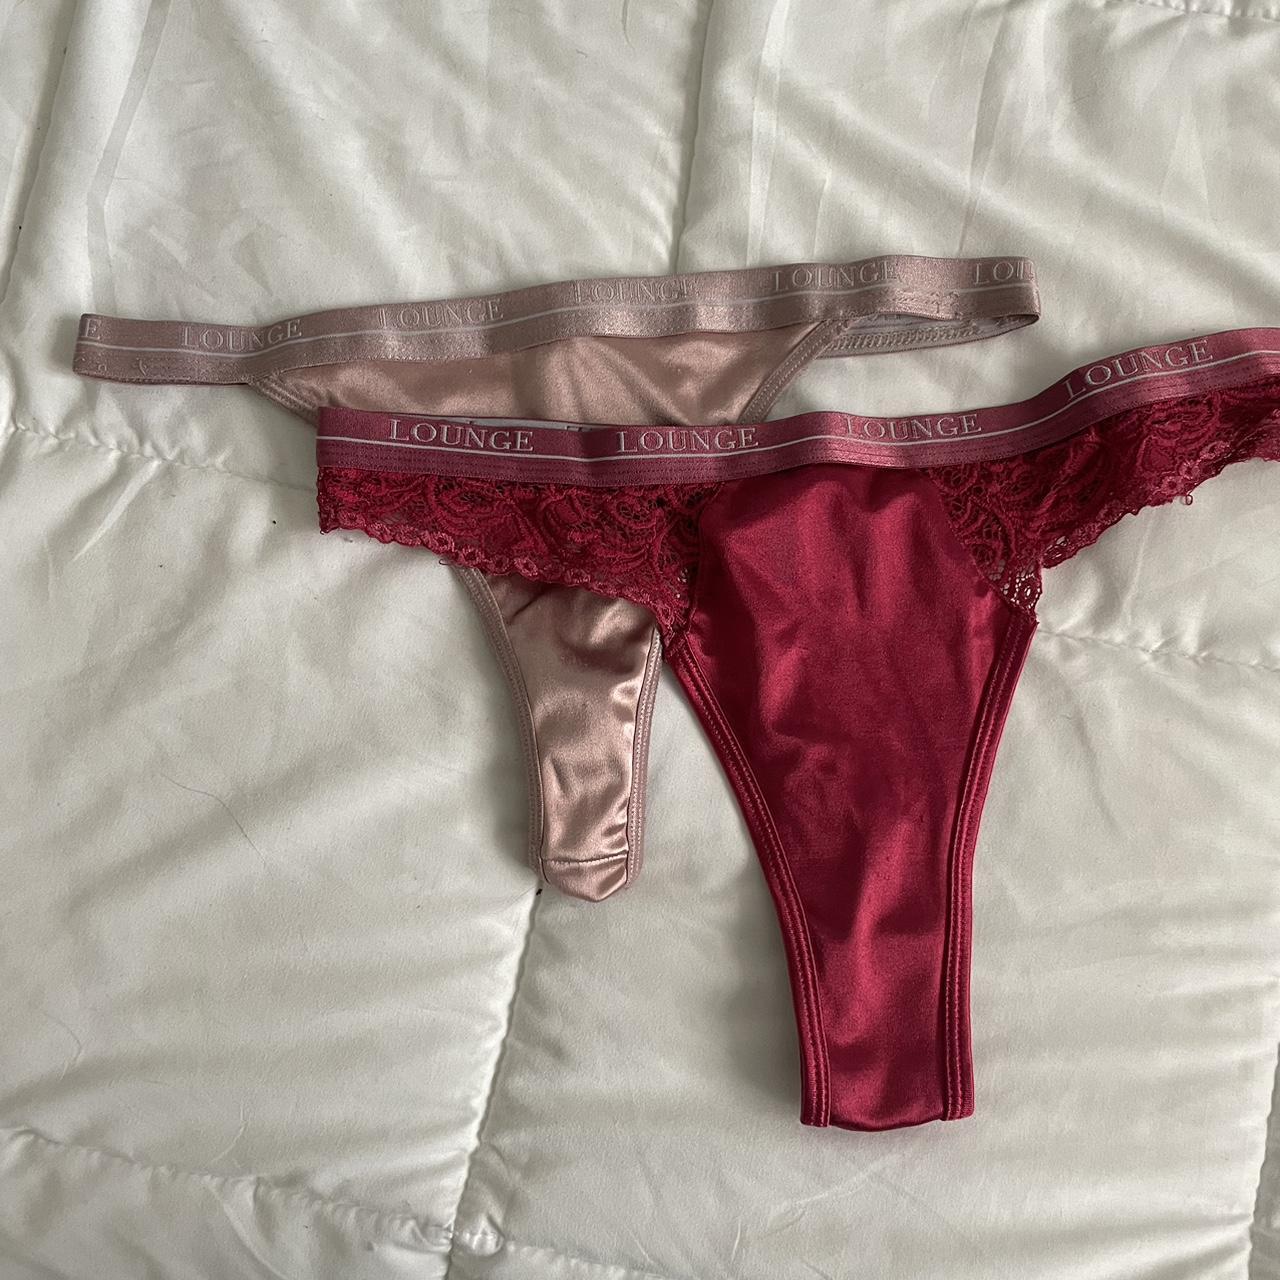 Used panties $40/thong Worn items message me for - Depop